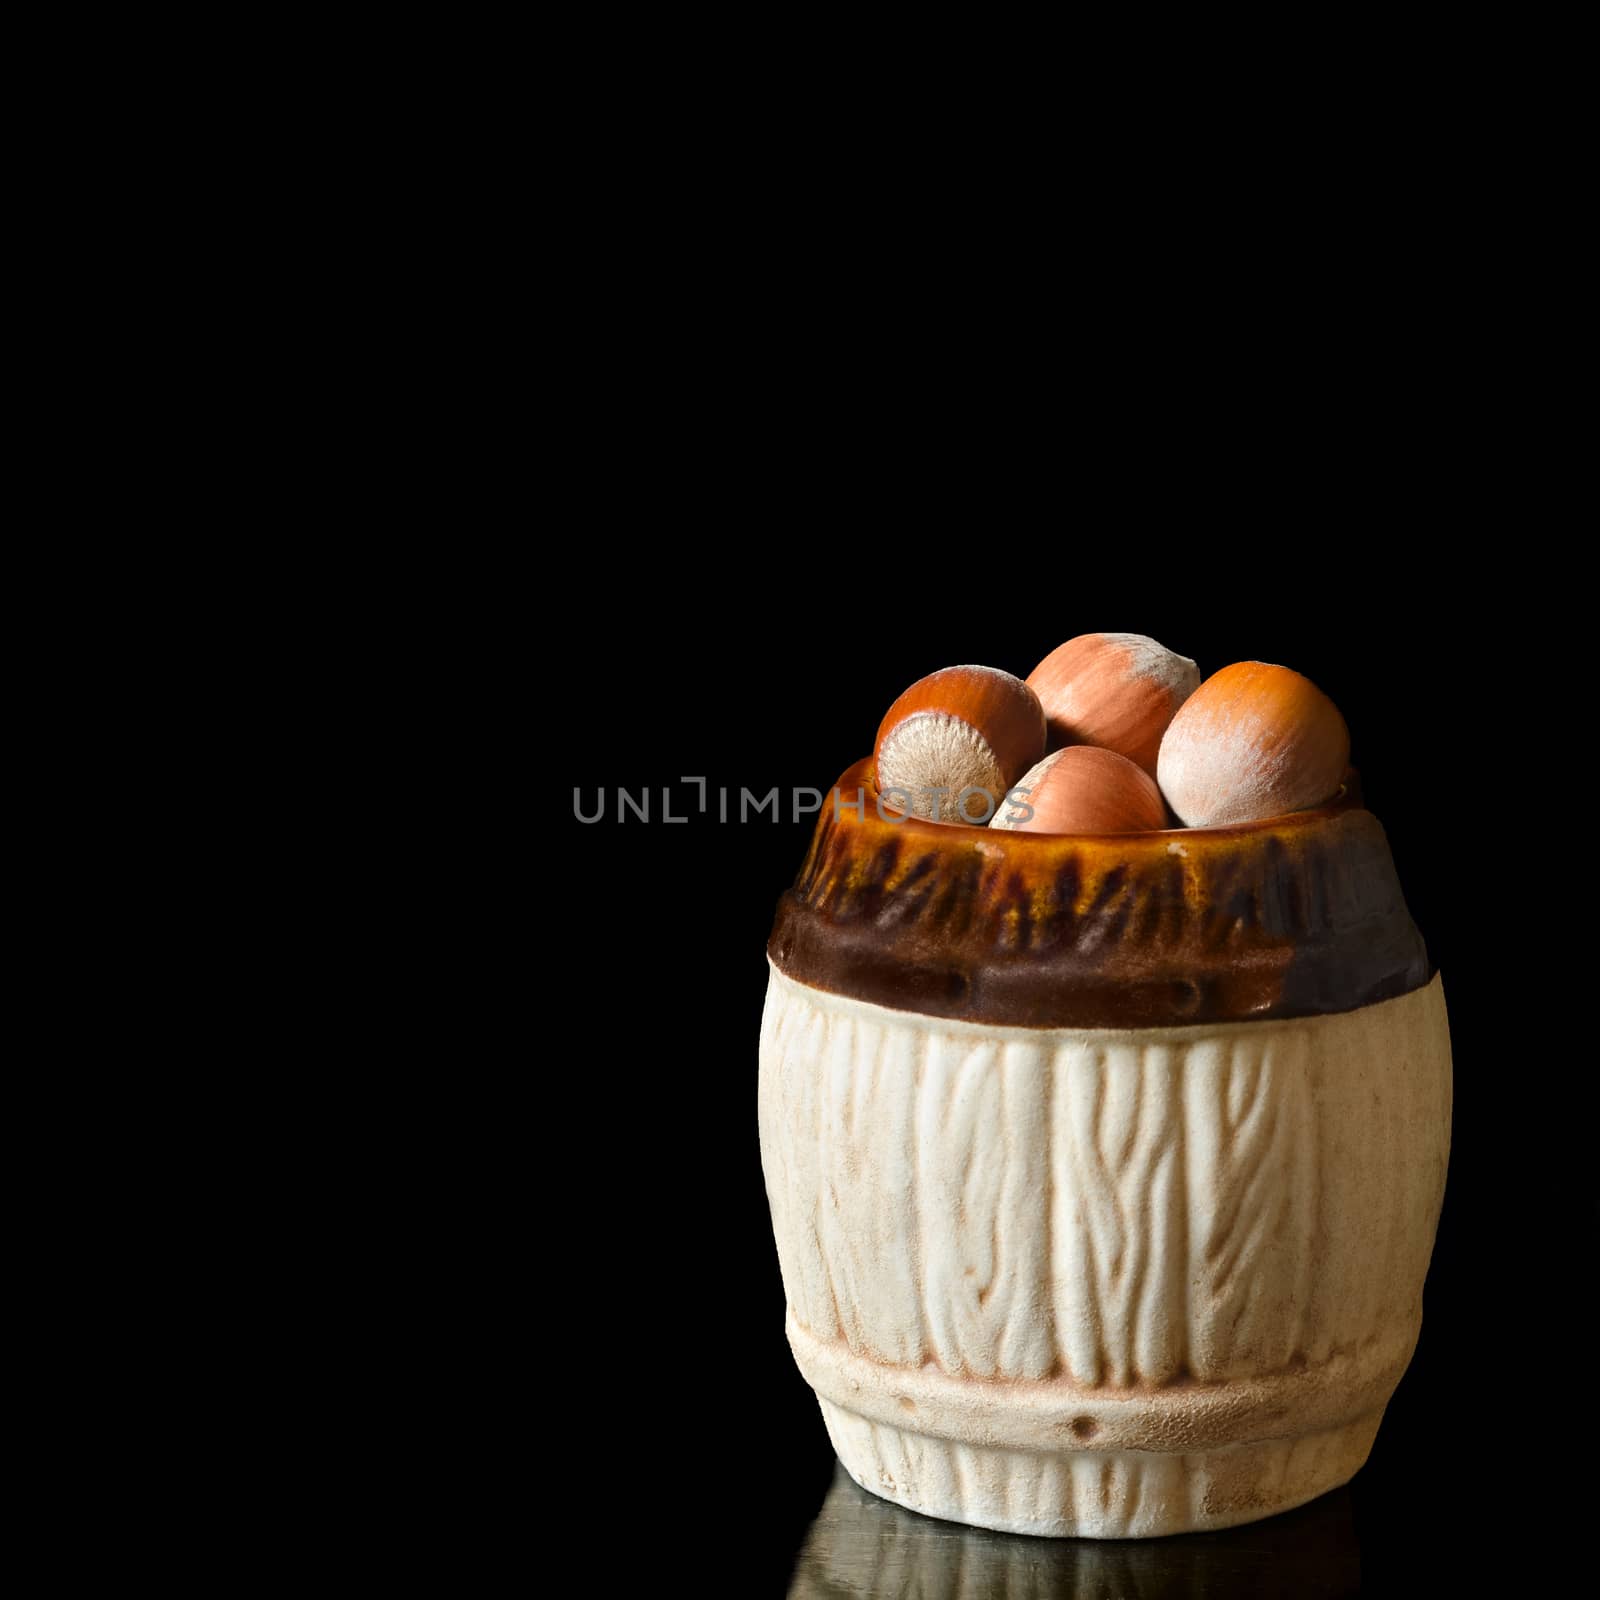 Hazelnuts on a black background,in a ceramic dish.